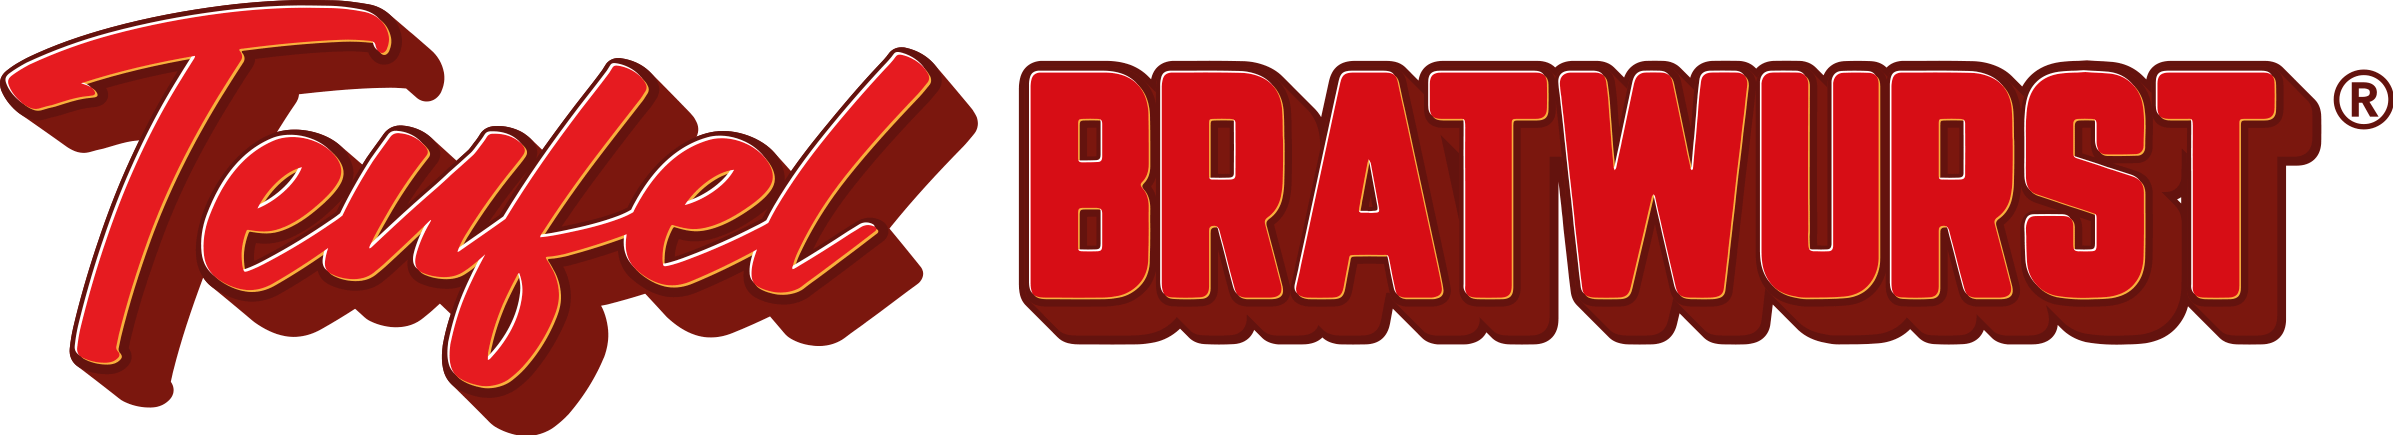 Teufel Bratwurst - Logo_quer